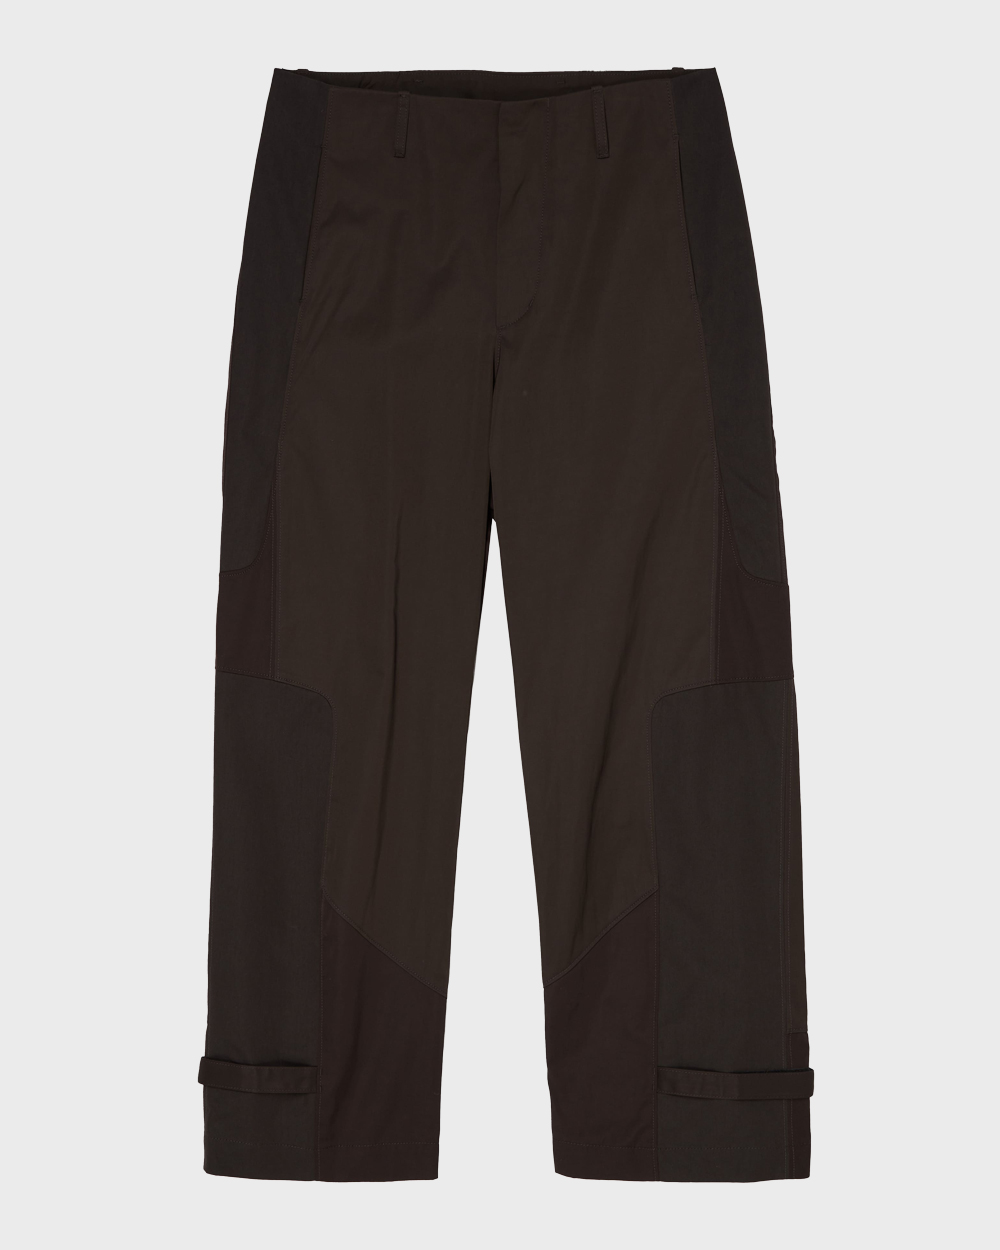 Nylon Combination Pants (Brown)